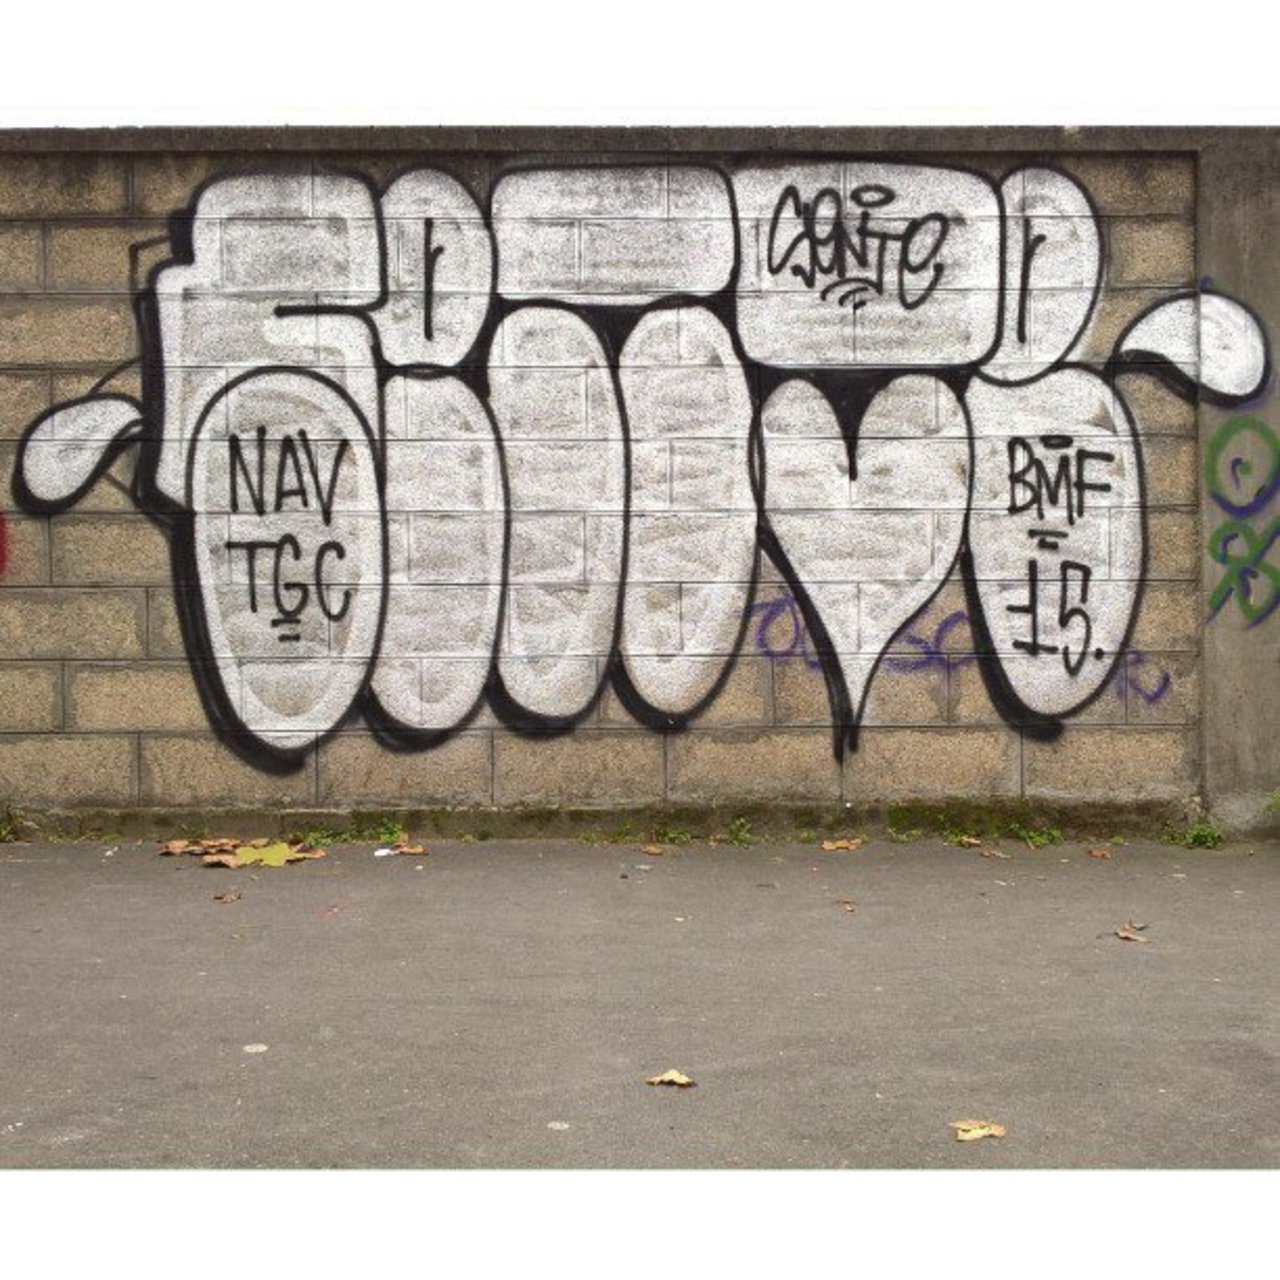 SENTE
#NAVcrew #BMF #TGC #streetart #graffiti #graff #art #fatcap #bombing #sprayart #spraycanart #wallart #handsty… https://t.co/j3rBbuqLCB